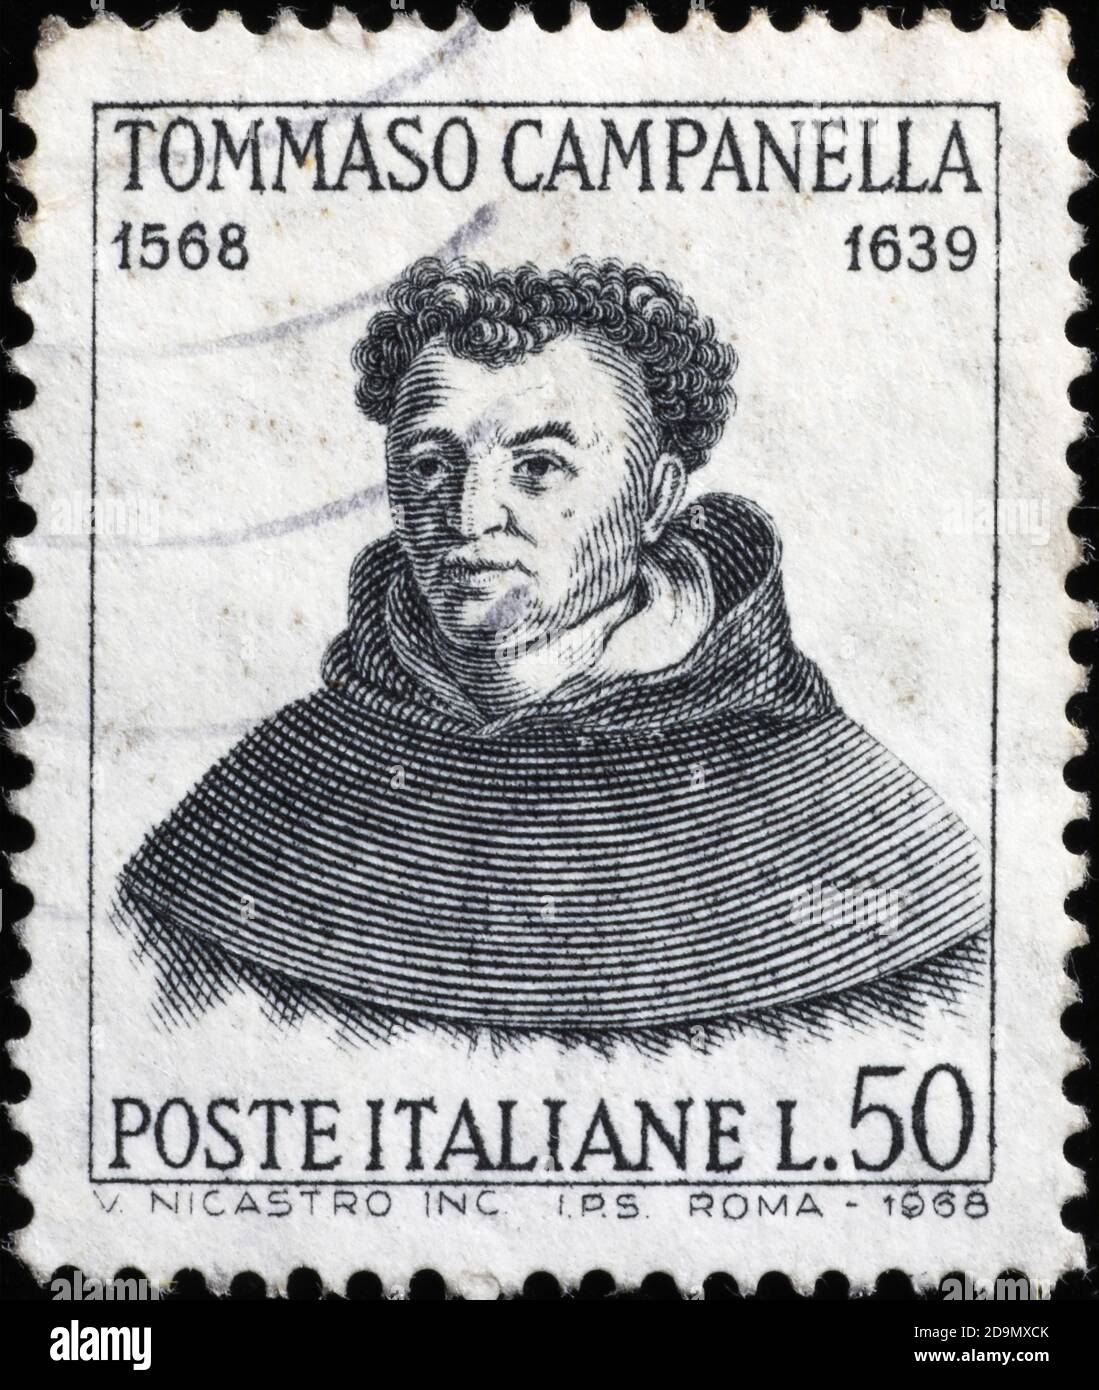 Tommaso Campanella on old italian postage stamp Stock Photo